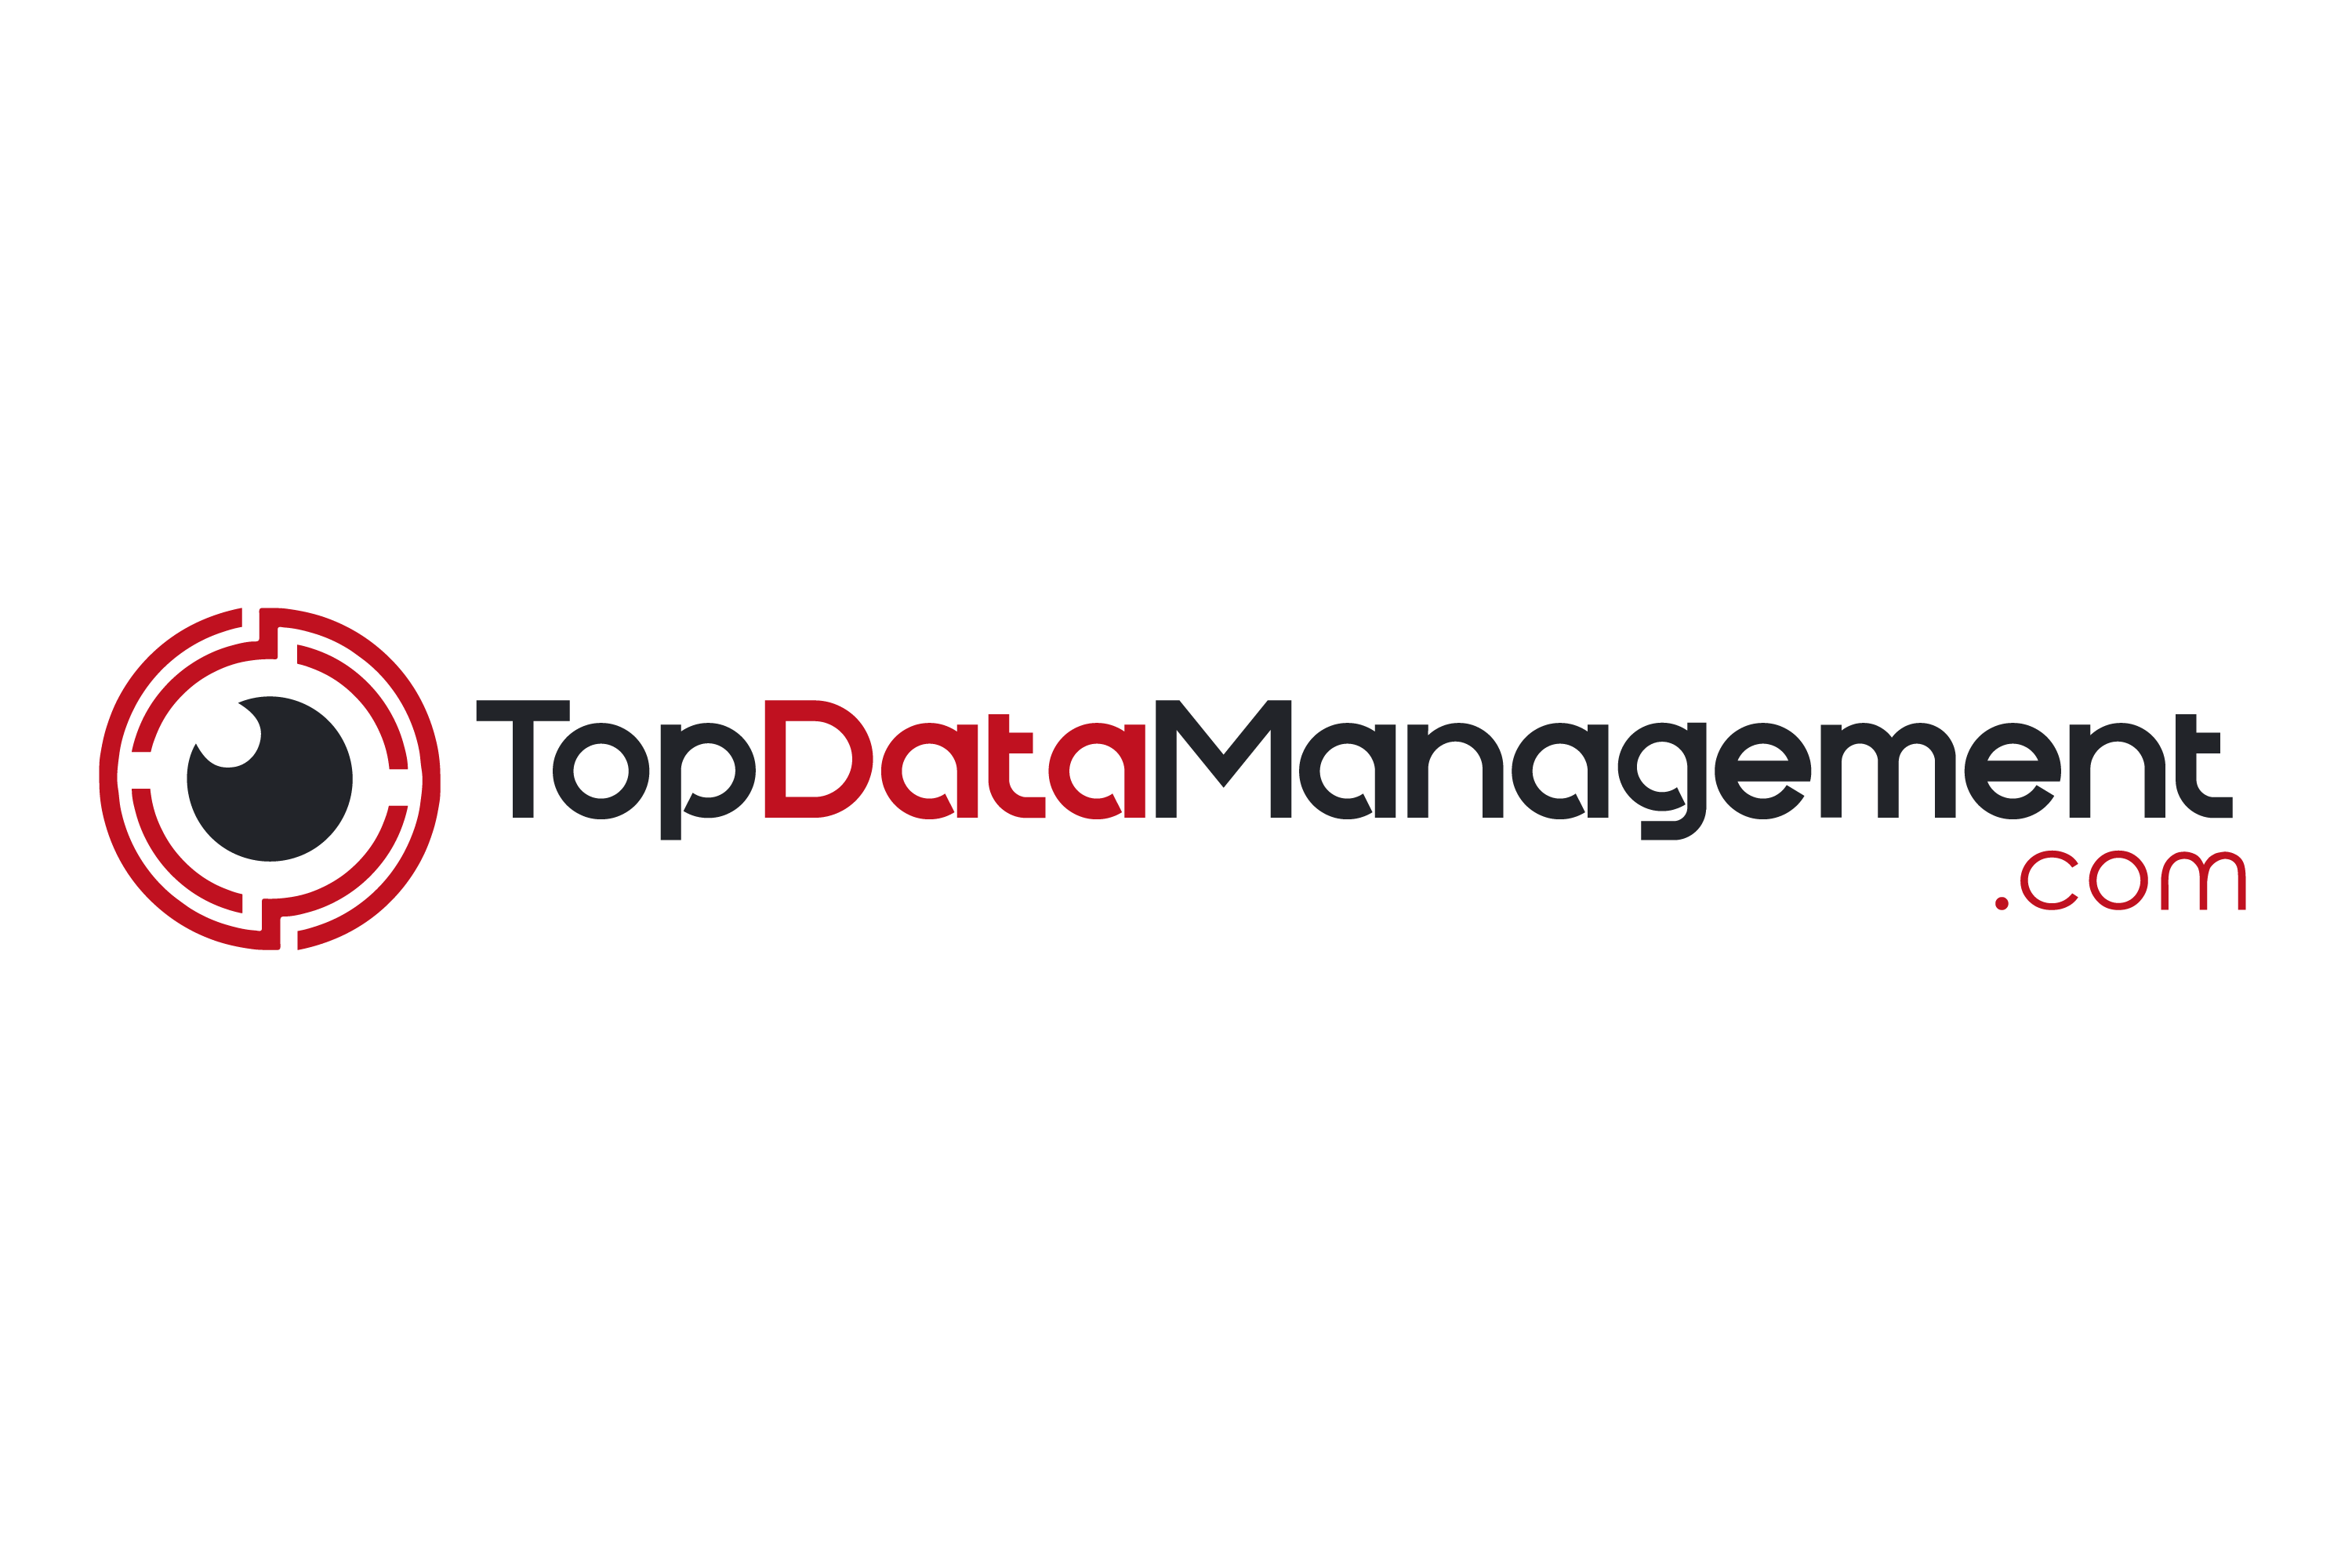 Top Data Management